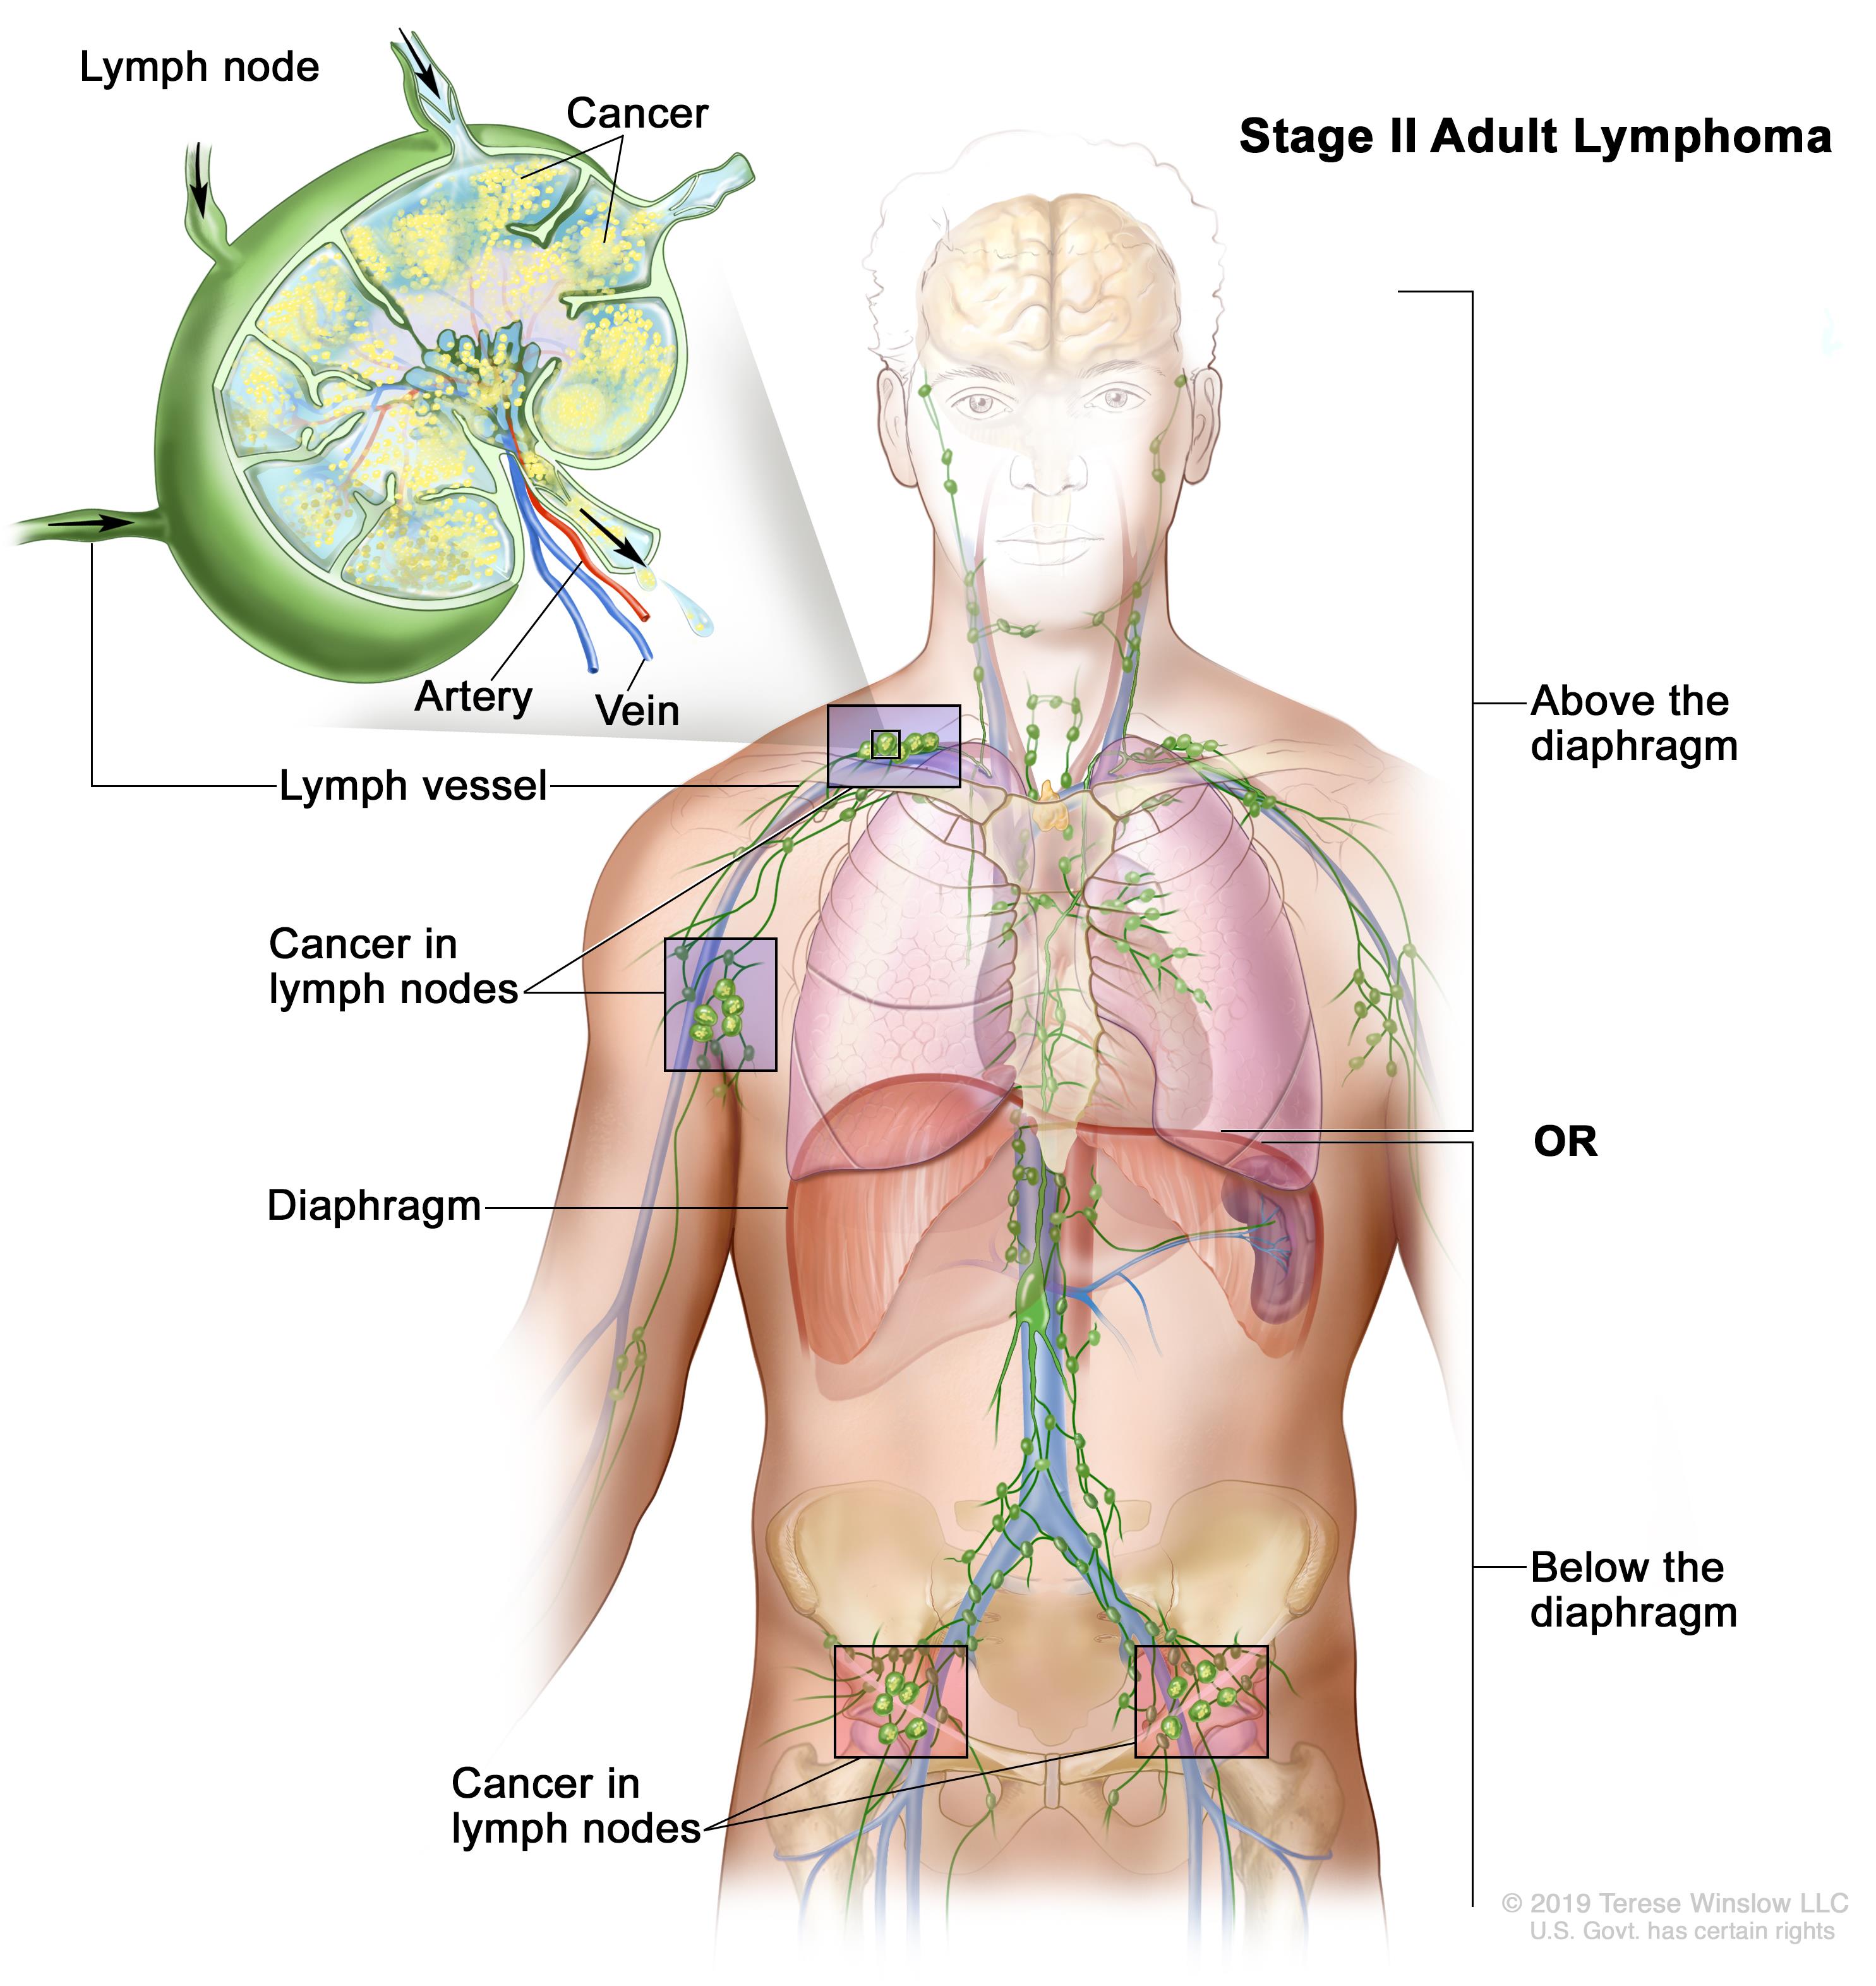 Non-Hodgkin lymphoma: Causes, Symptoms & Risk factors